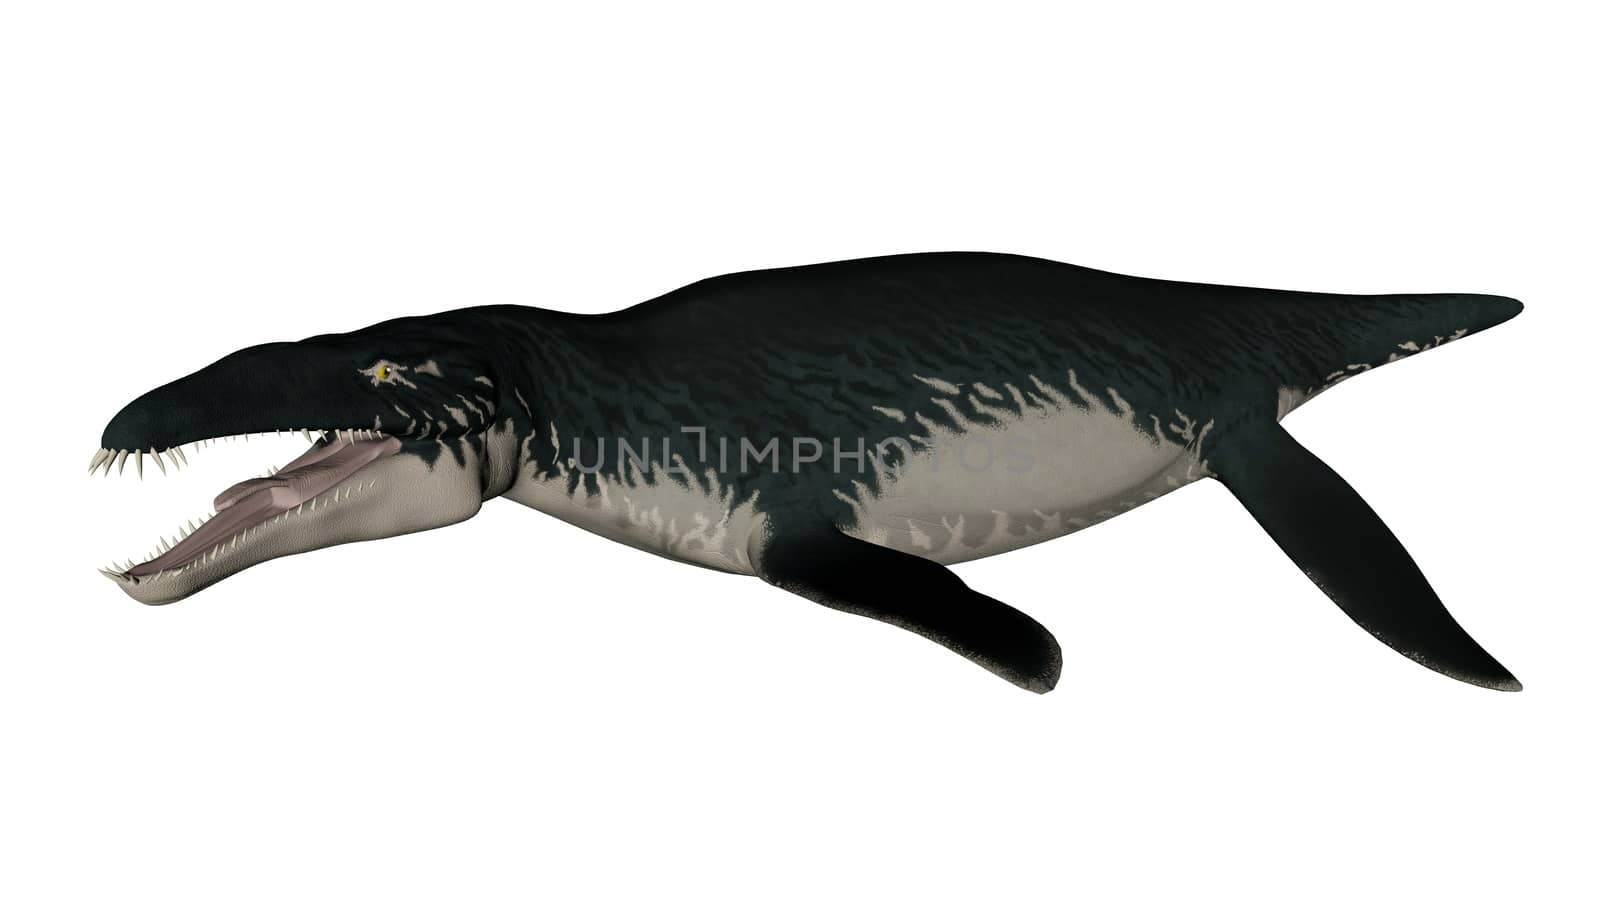 Liopleurodon prehistoric fish - 3D render by Elenaphotos21